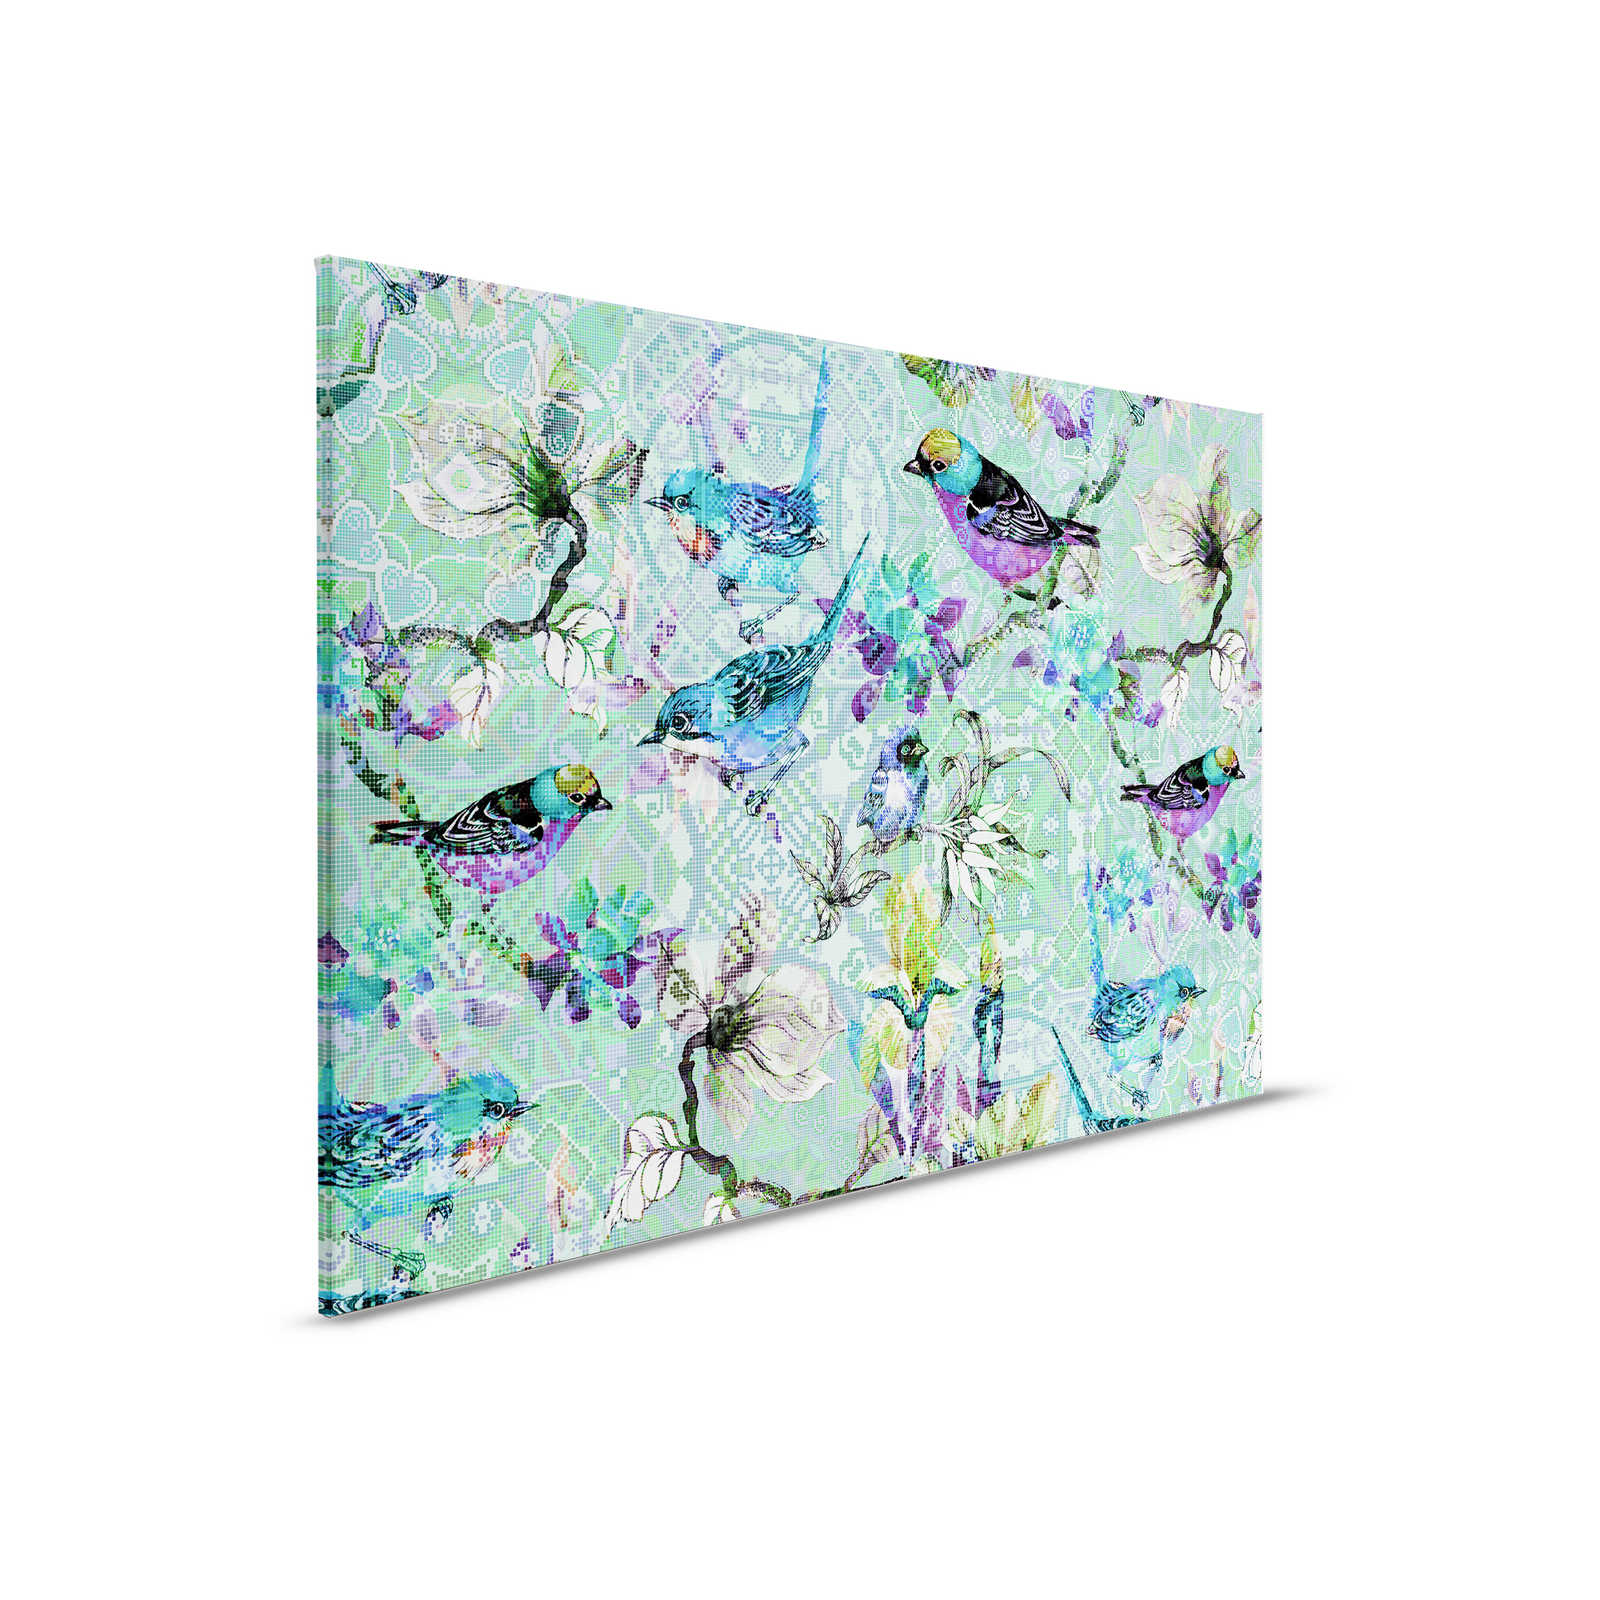         Bird canvas picture with mosaic pattern | mosaic birds 3 - 0,90 m x 0,60 m
    